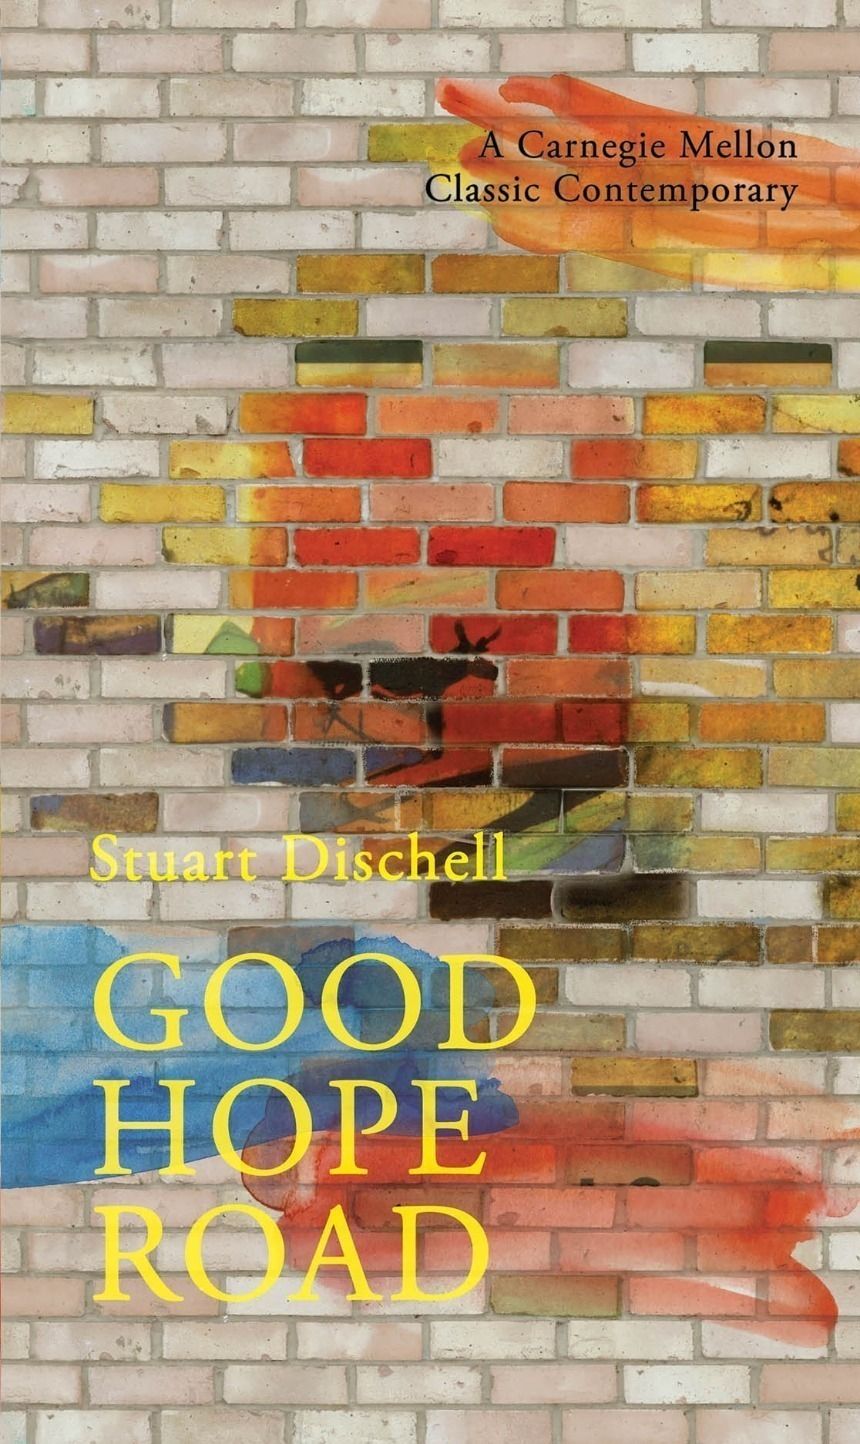 Stuart Dischell's "Good Hope Road" cover